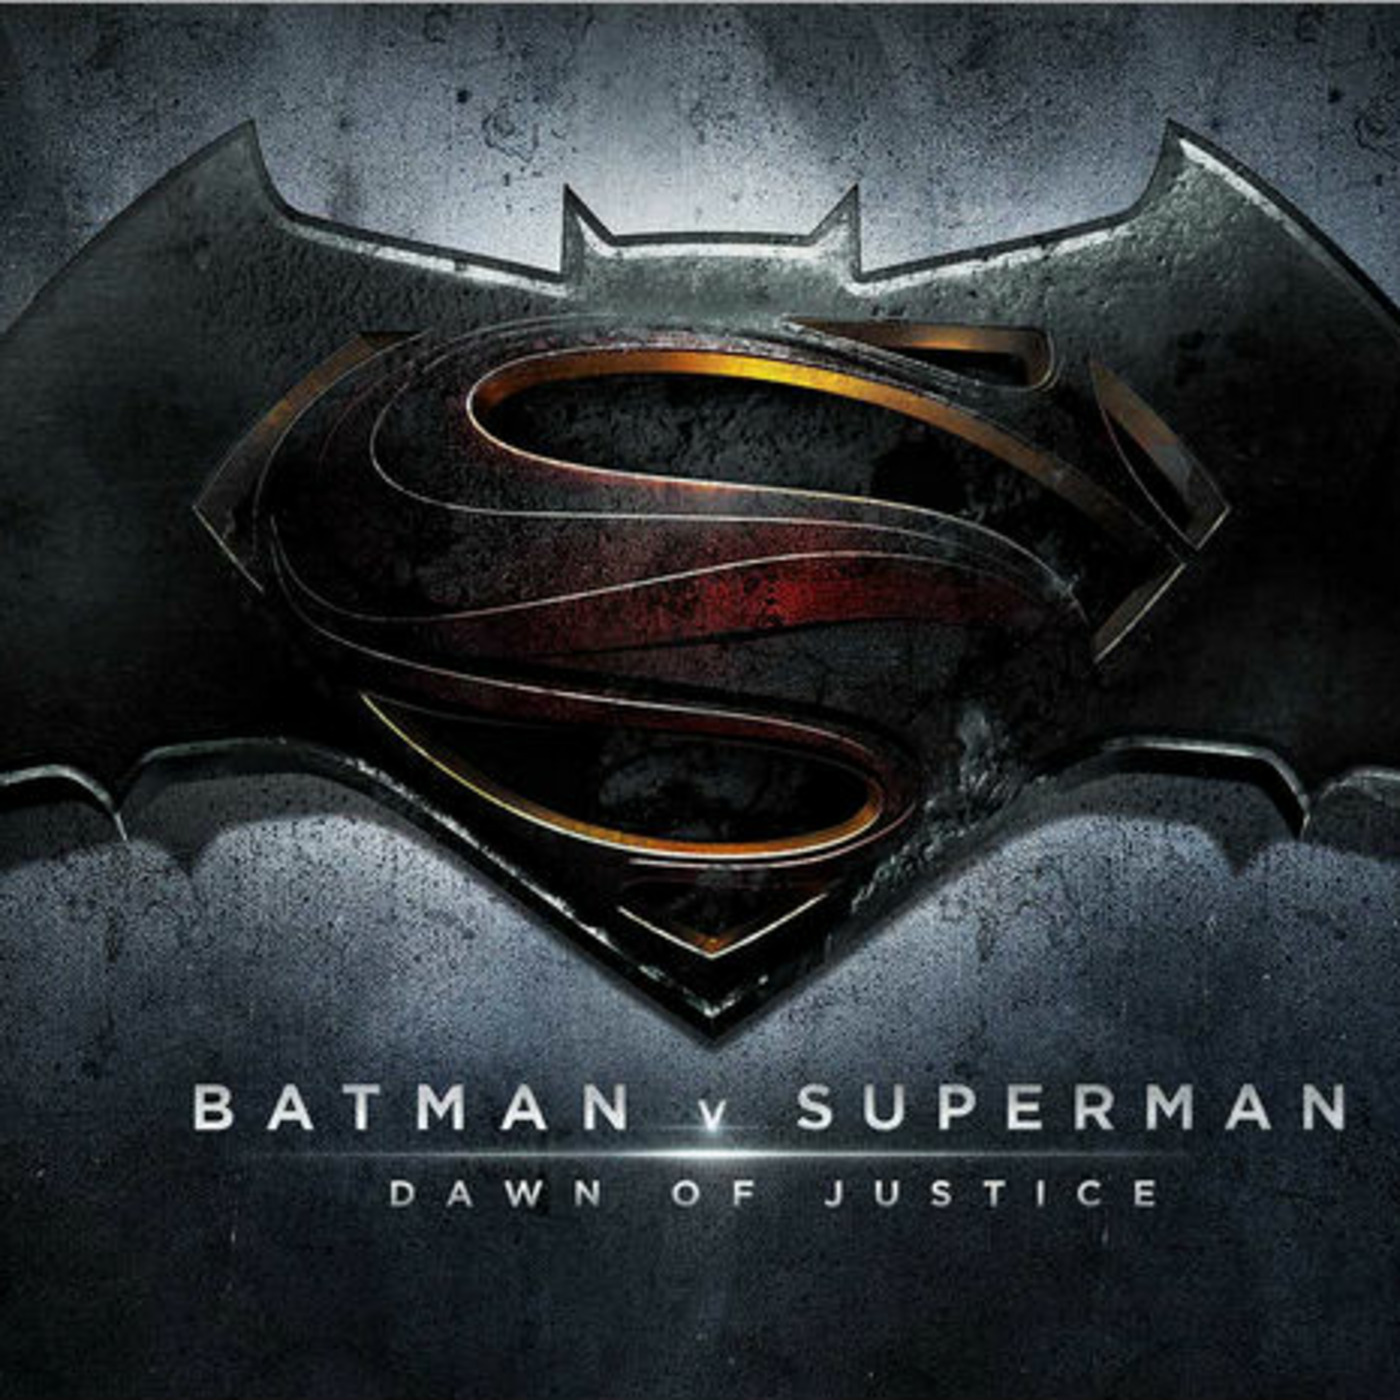 Episode 176: [REBROADCAST] Batman v Superman Extended Cut audio commentary